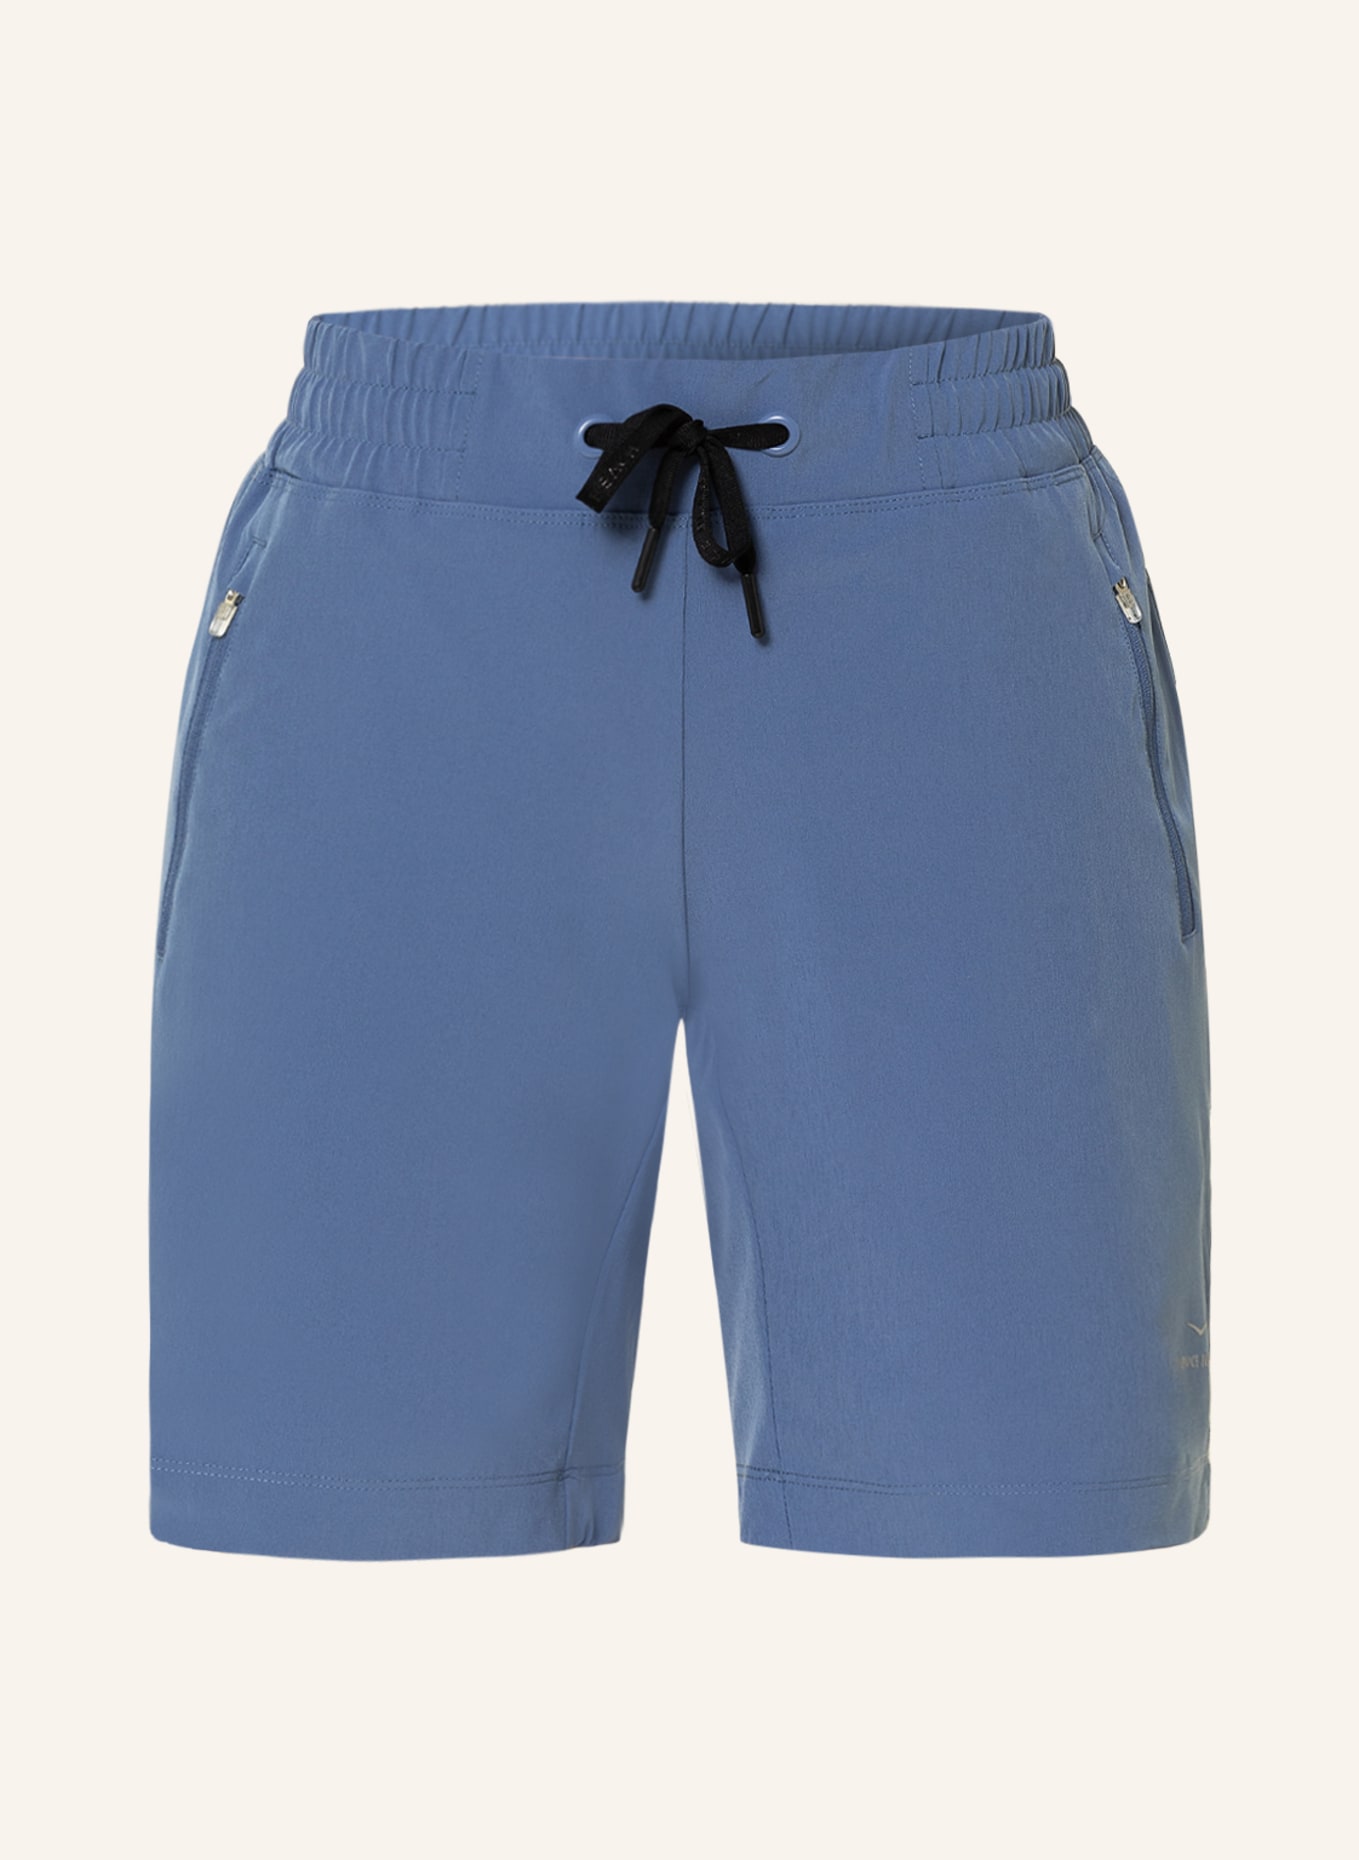 VENICE BEACH Training shorts SHELBY in blue